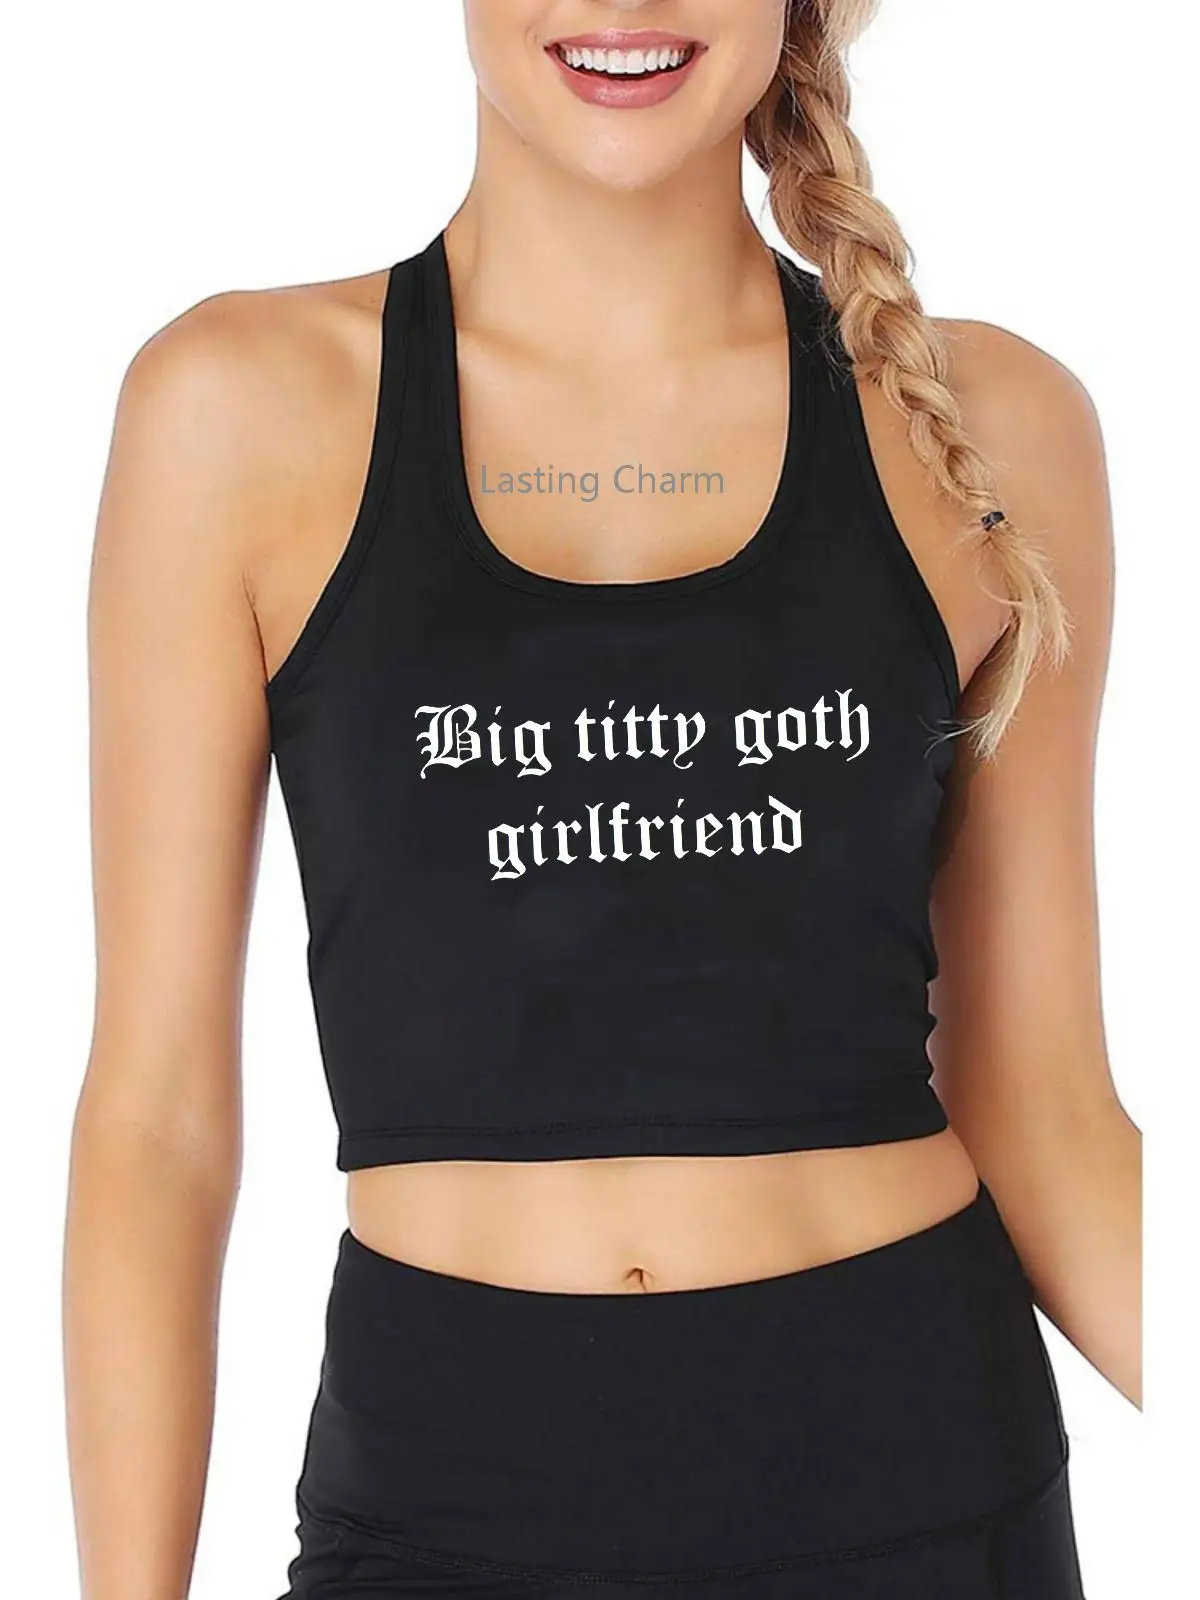 Big titty goth girlfriend Crop Tank Adult Humor Fun Flirty Print Yoga Sports Workout Crop Top Women's Gym Tops